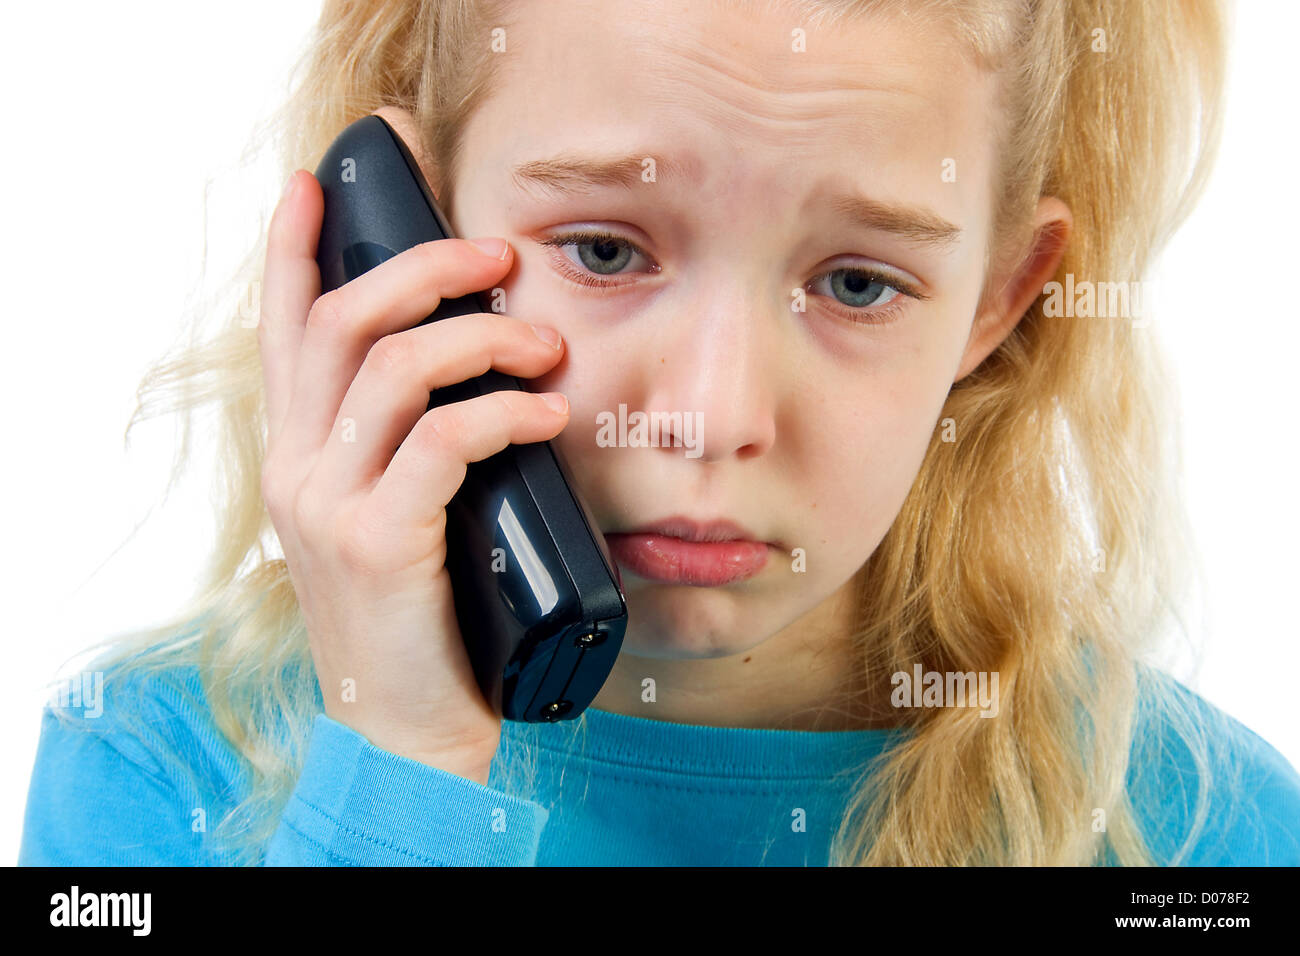 sad girl on the phone, bad news, isolated on white background Stock Photo